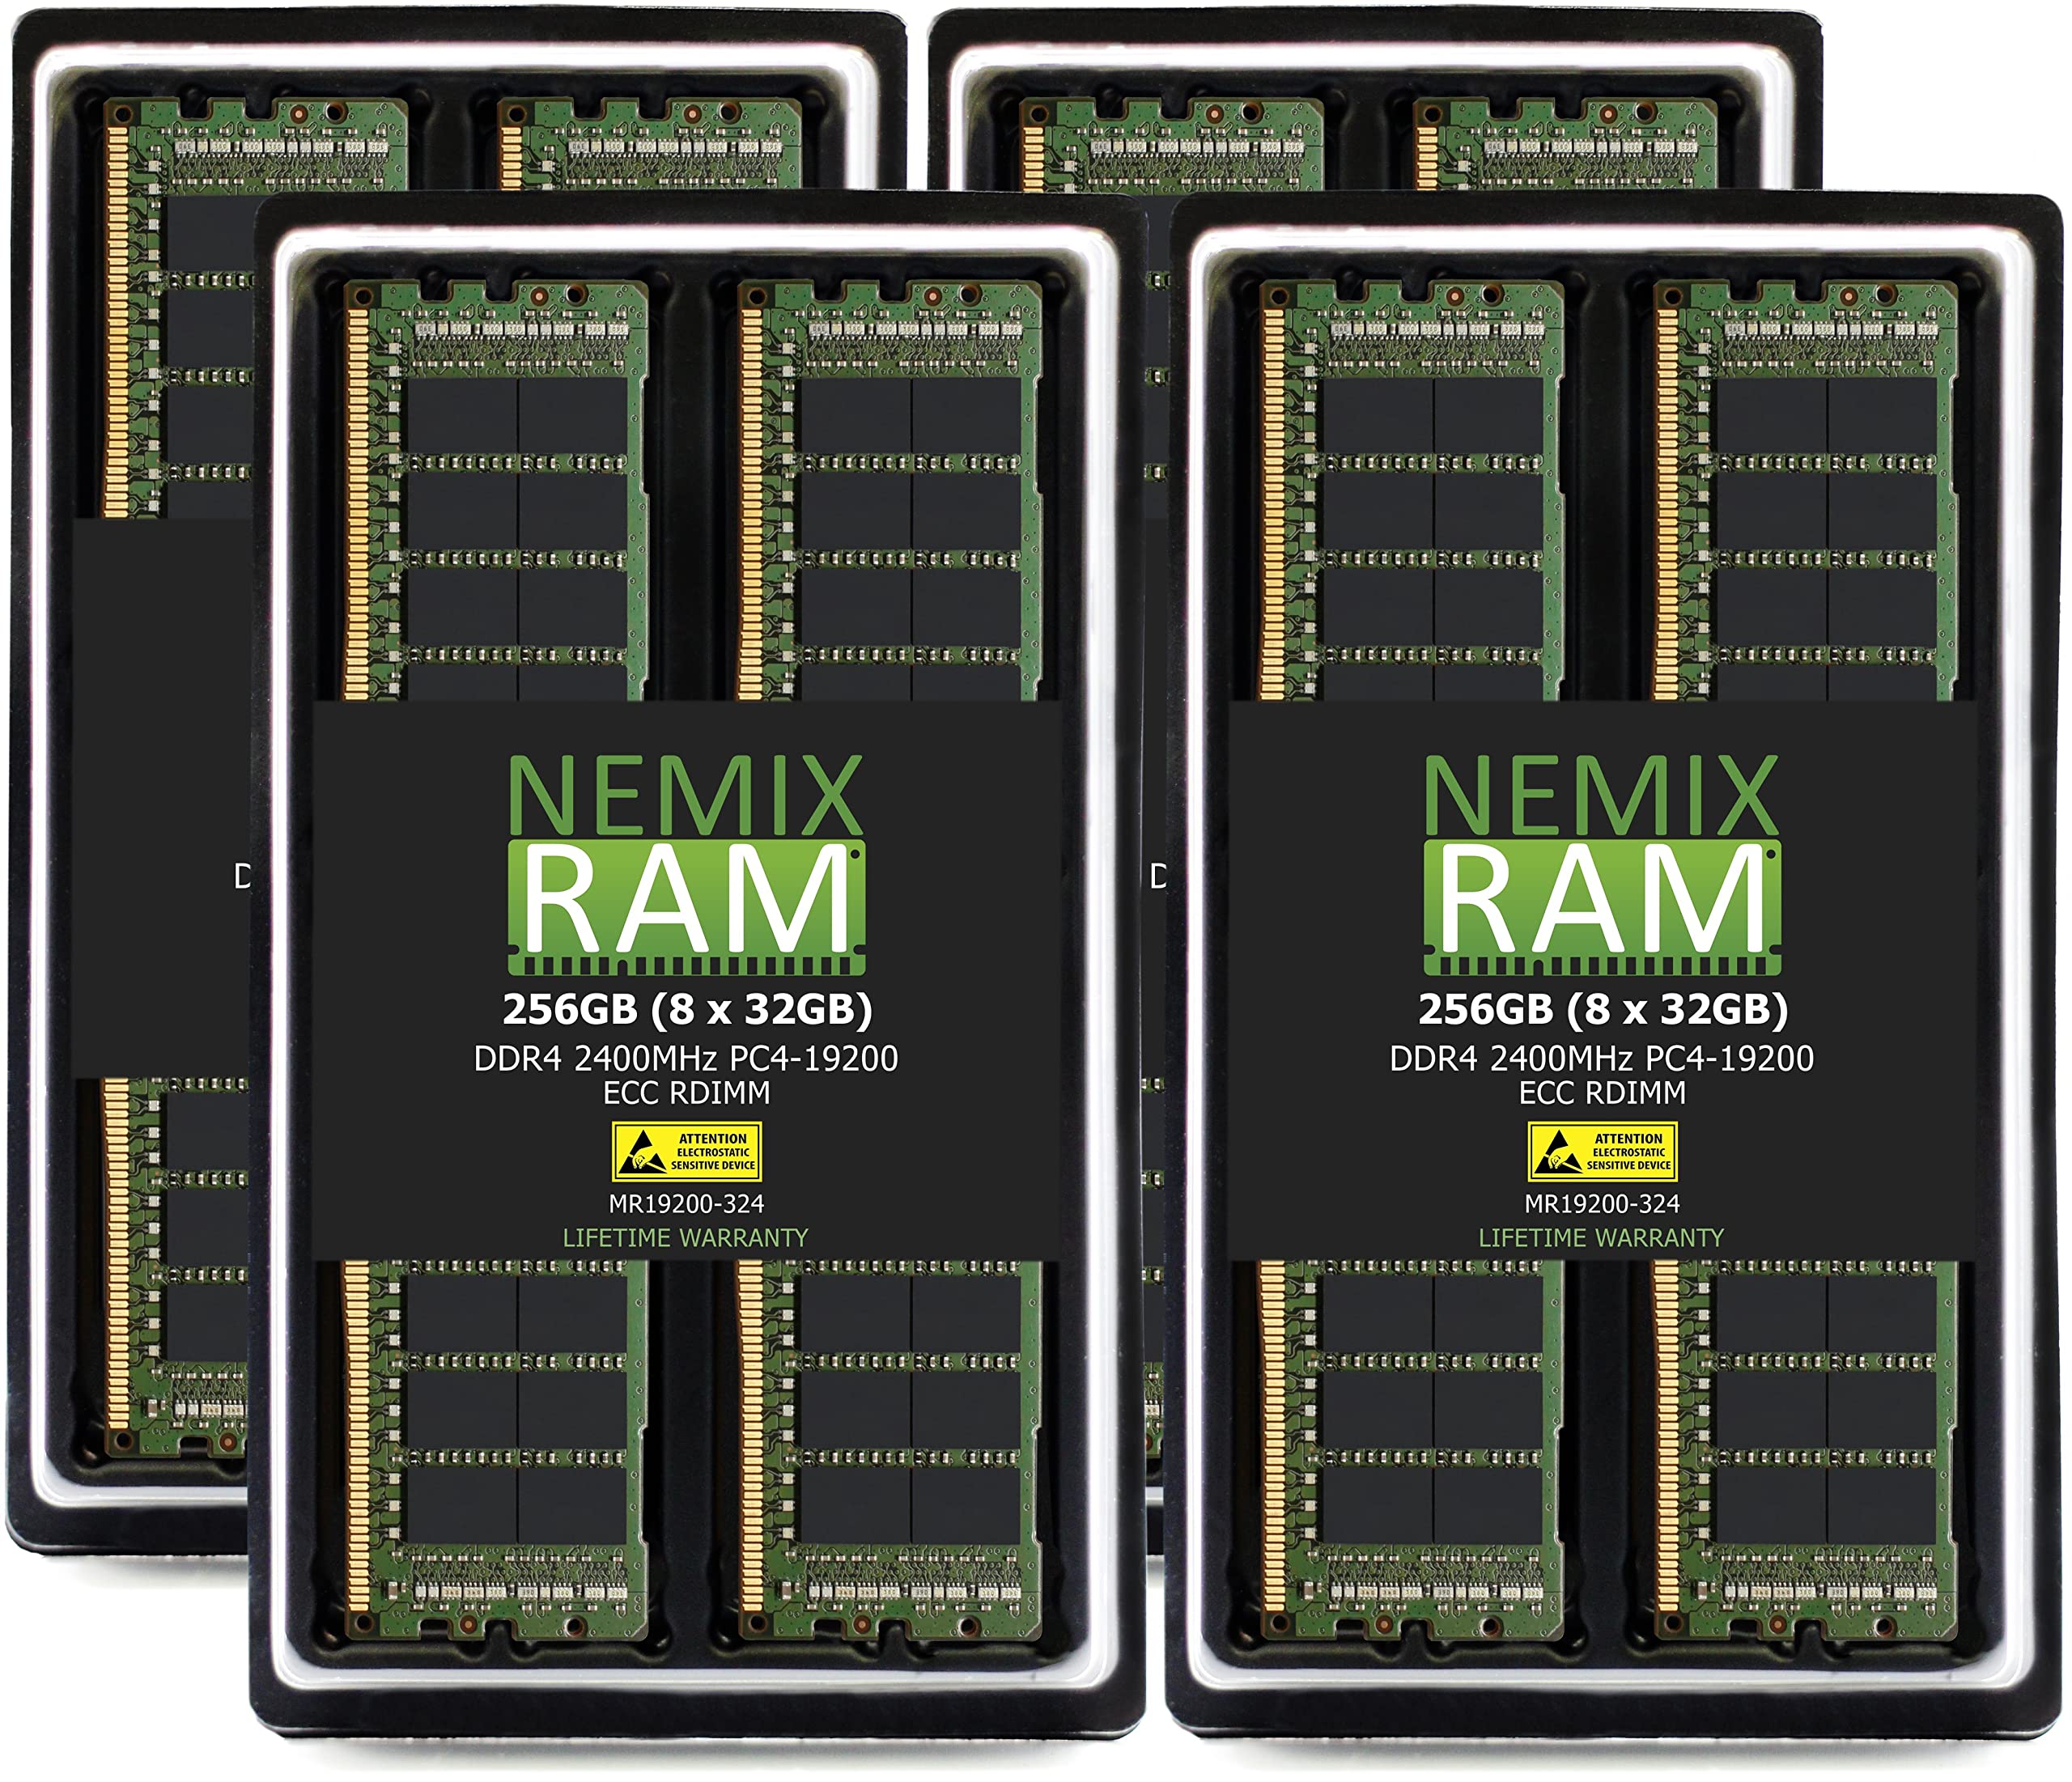 256GB 8x32GB DDR4-2400 RDIMM 2Rx4 Memory for ASUS KNPA-U16 AMD EPYC 7000 Series by Nemix Ram